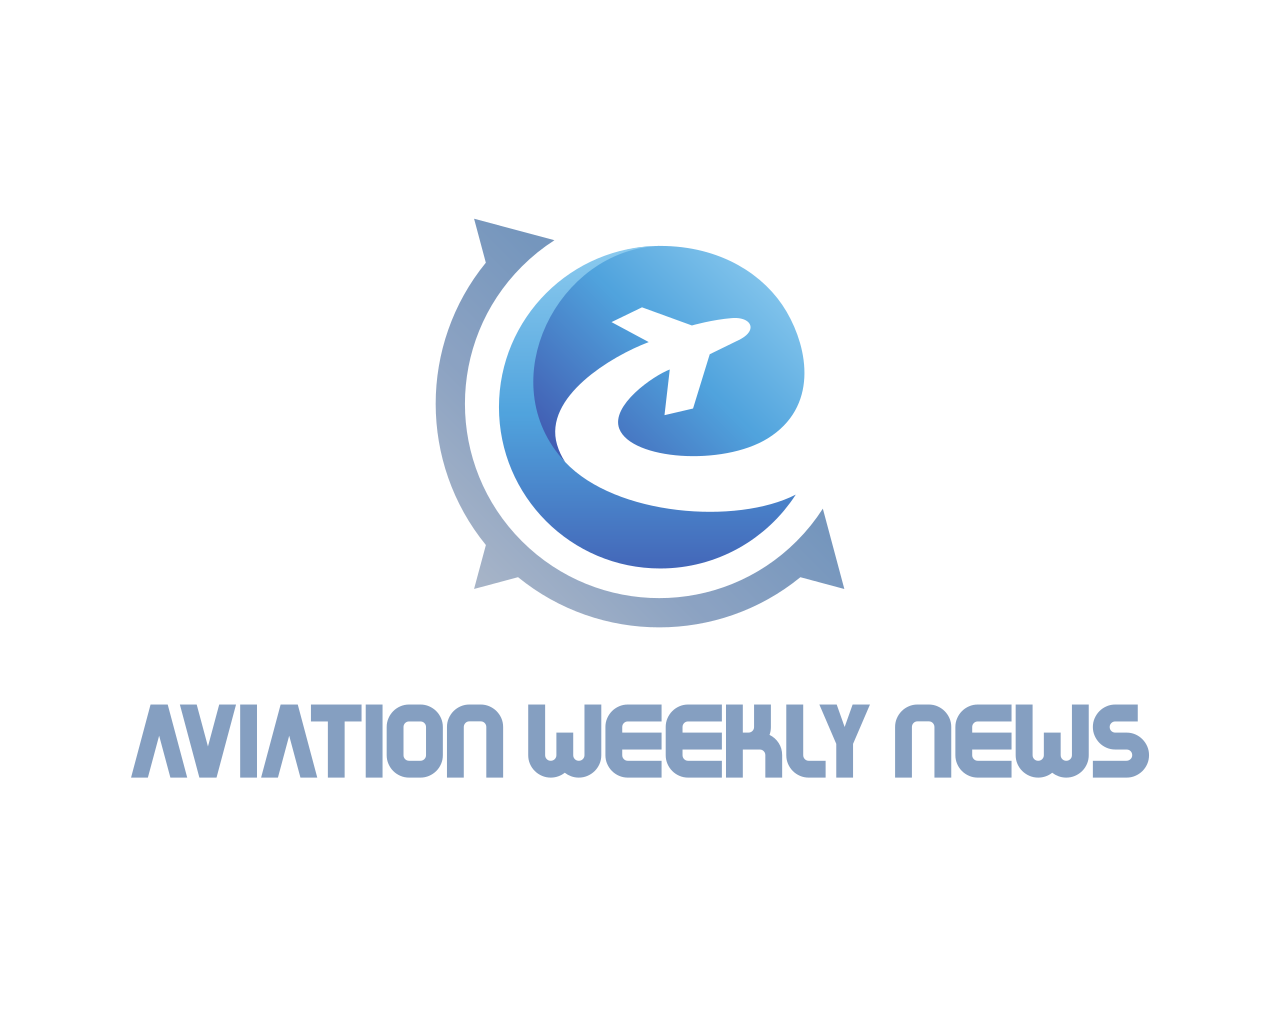 Aviation Weekly